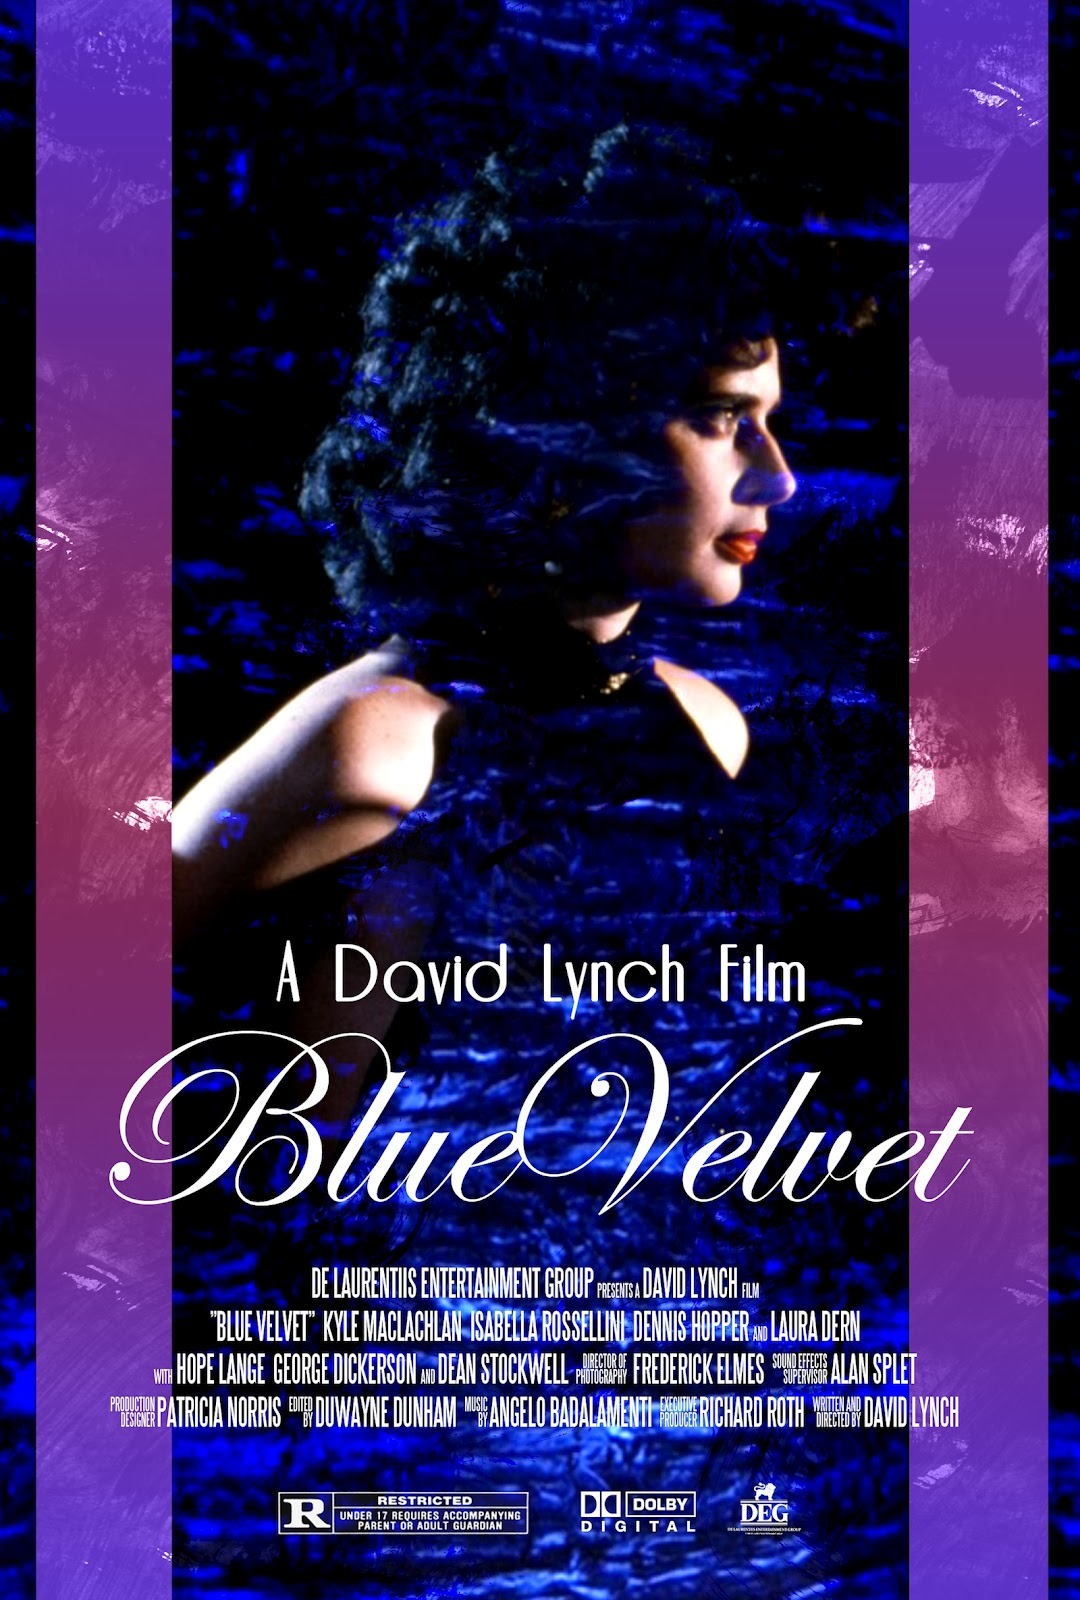 56 Top Images Blue Velvet Movie Reviews - Blue Velvet (Blu-ray) : DVD Talk Review of the Blu-ray